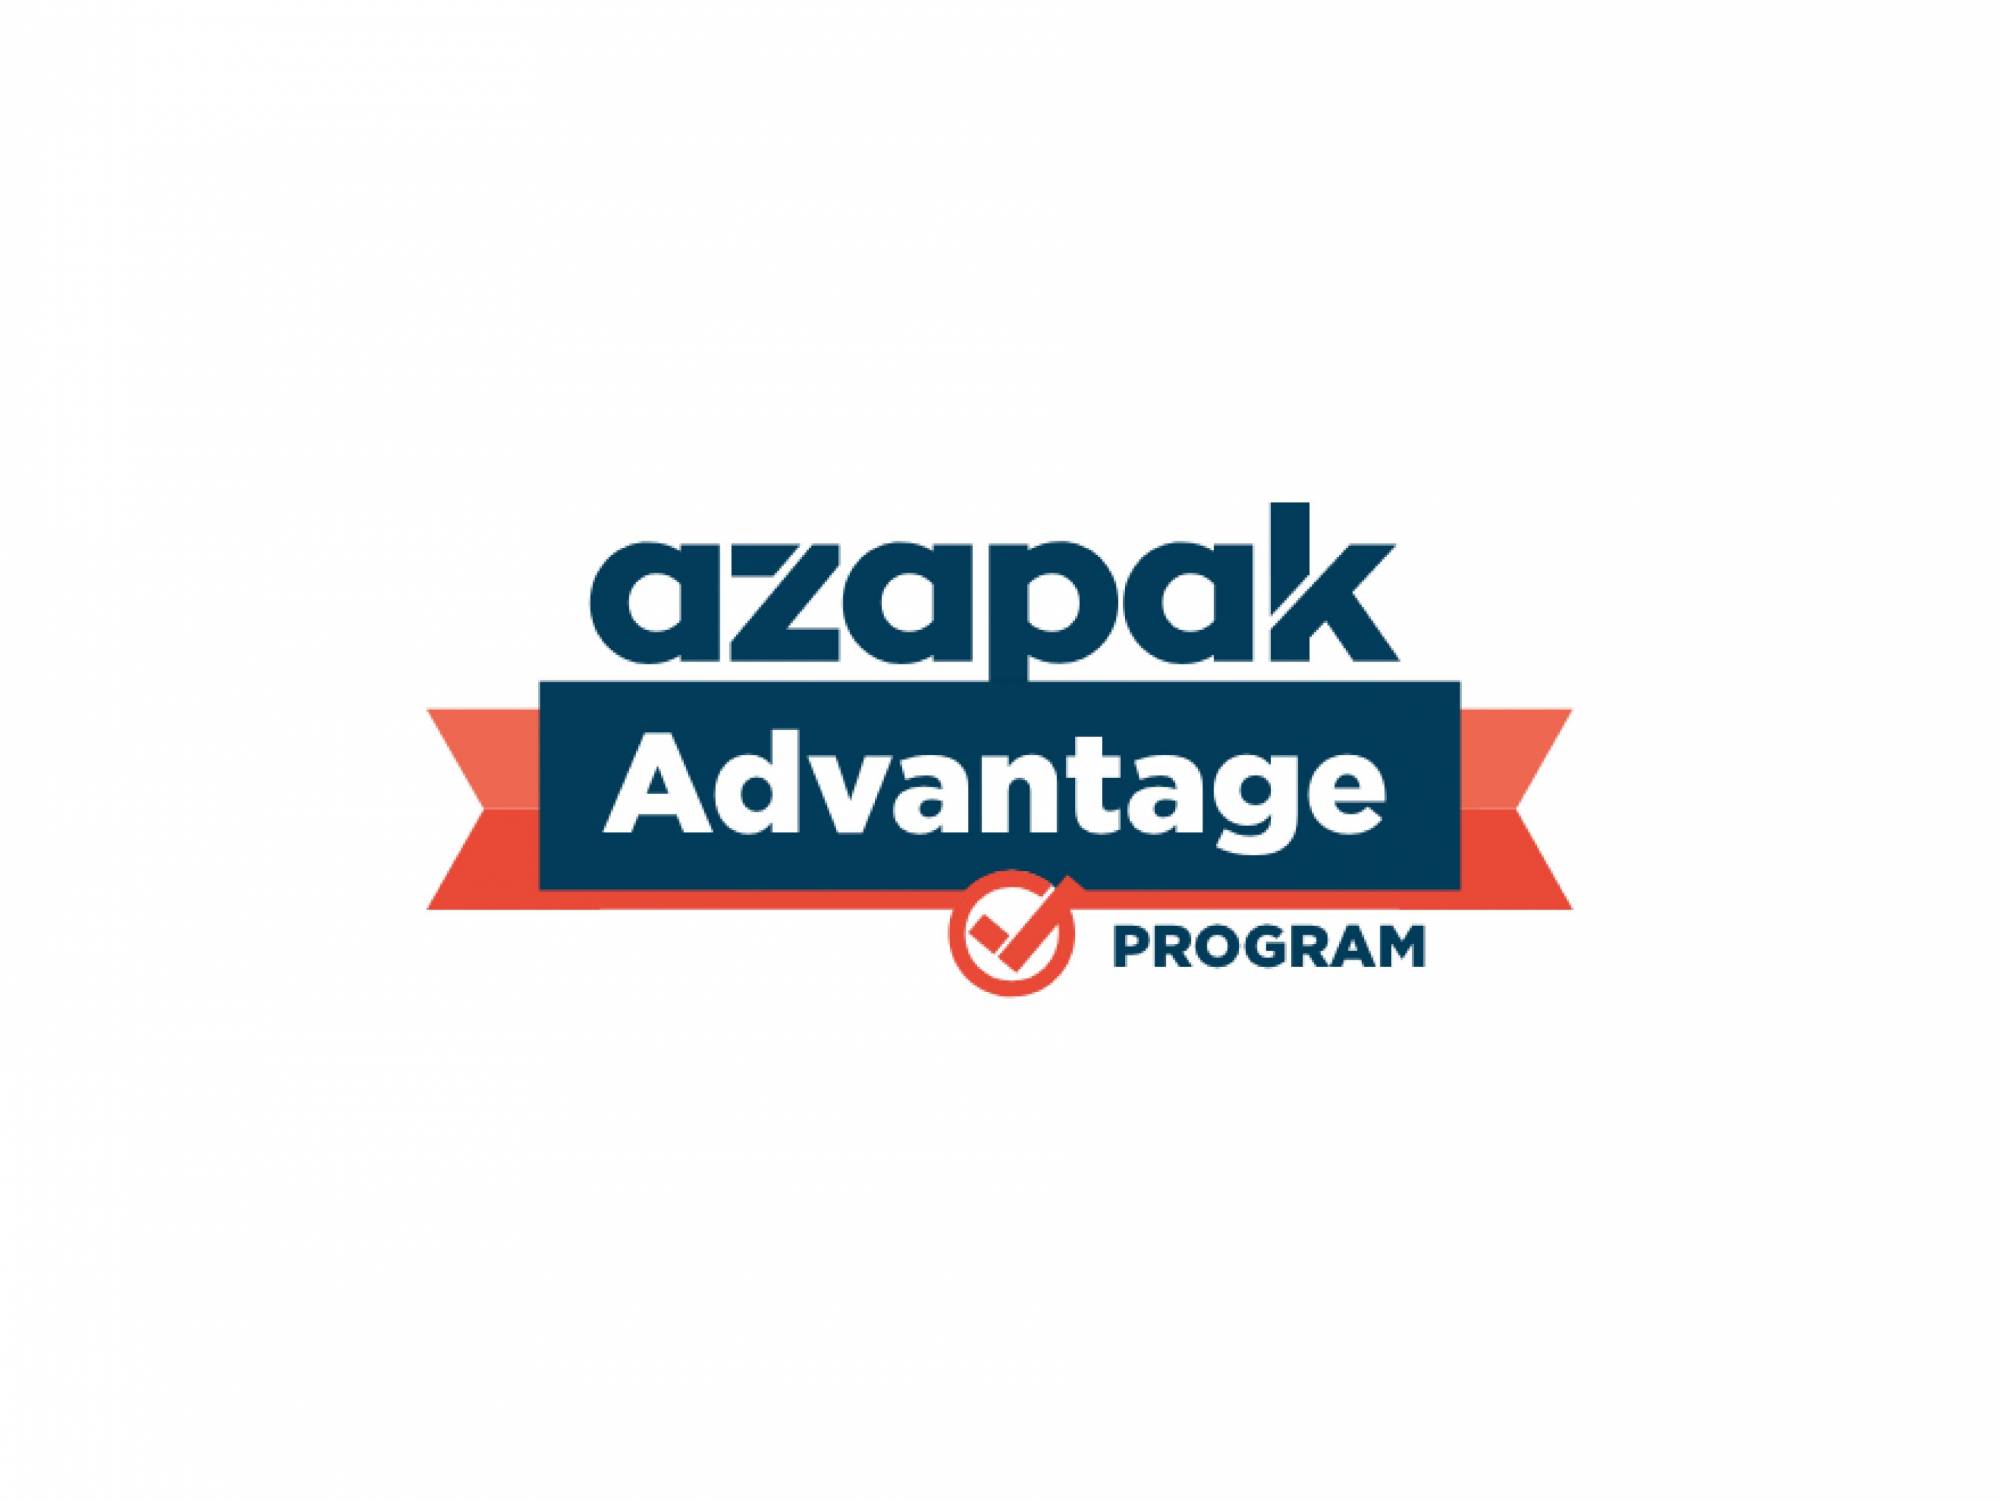 azapak advantage program brand design